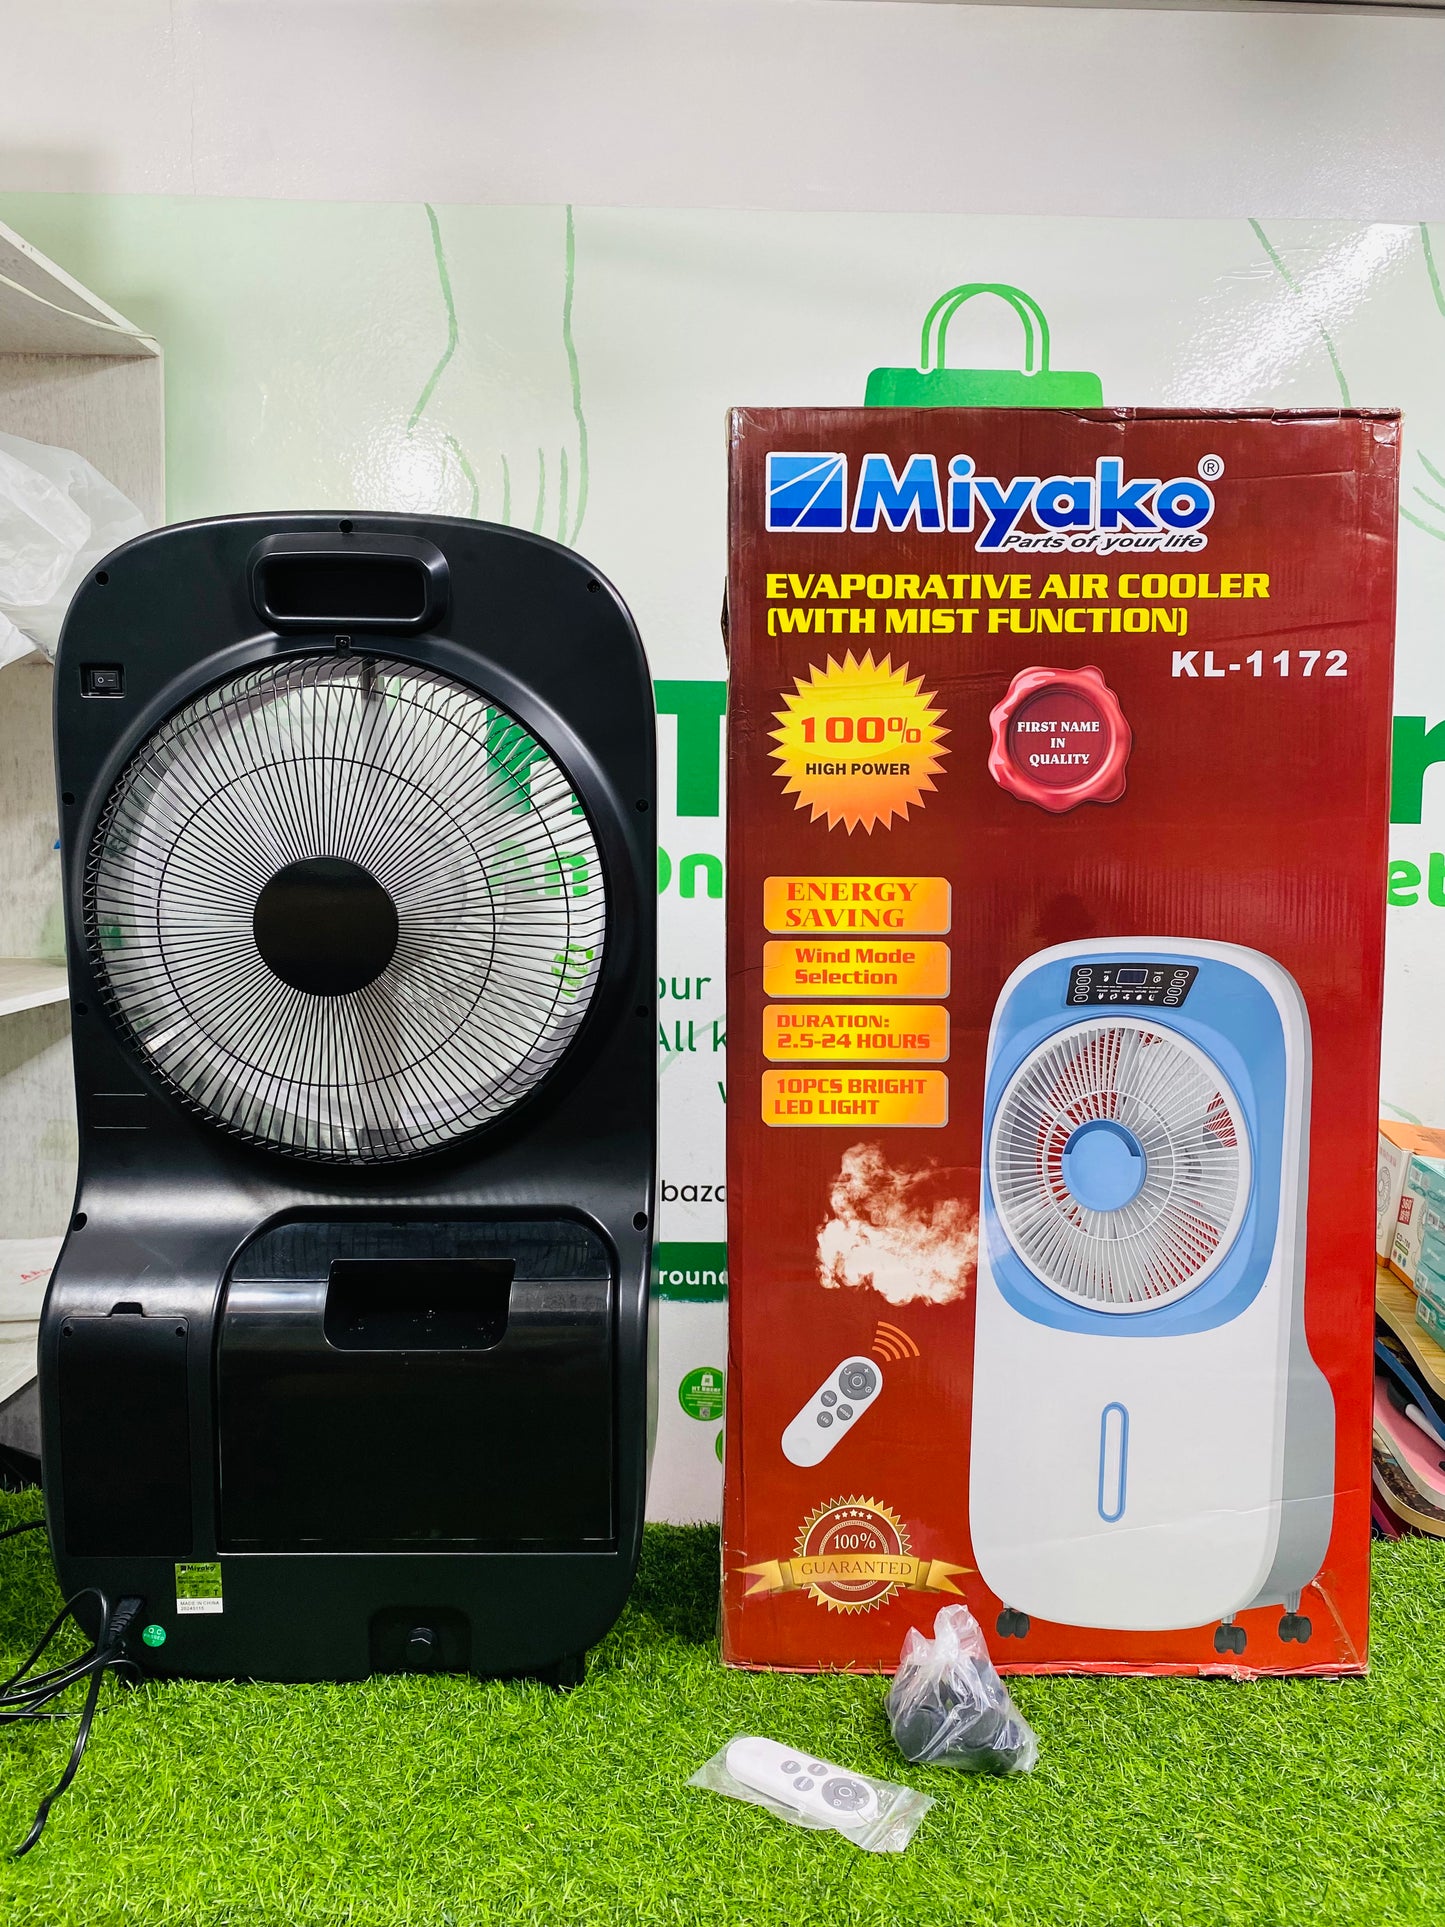 Miyako evaporative air cooler with mist function - HT Bazar